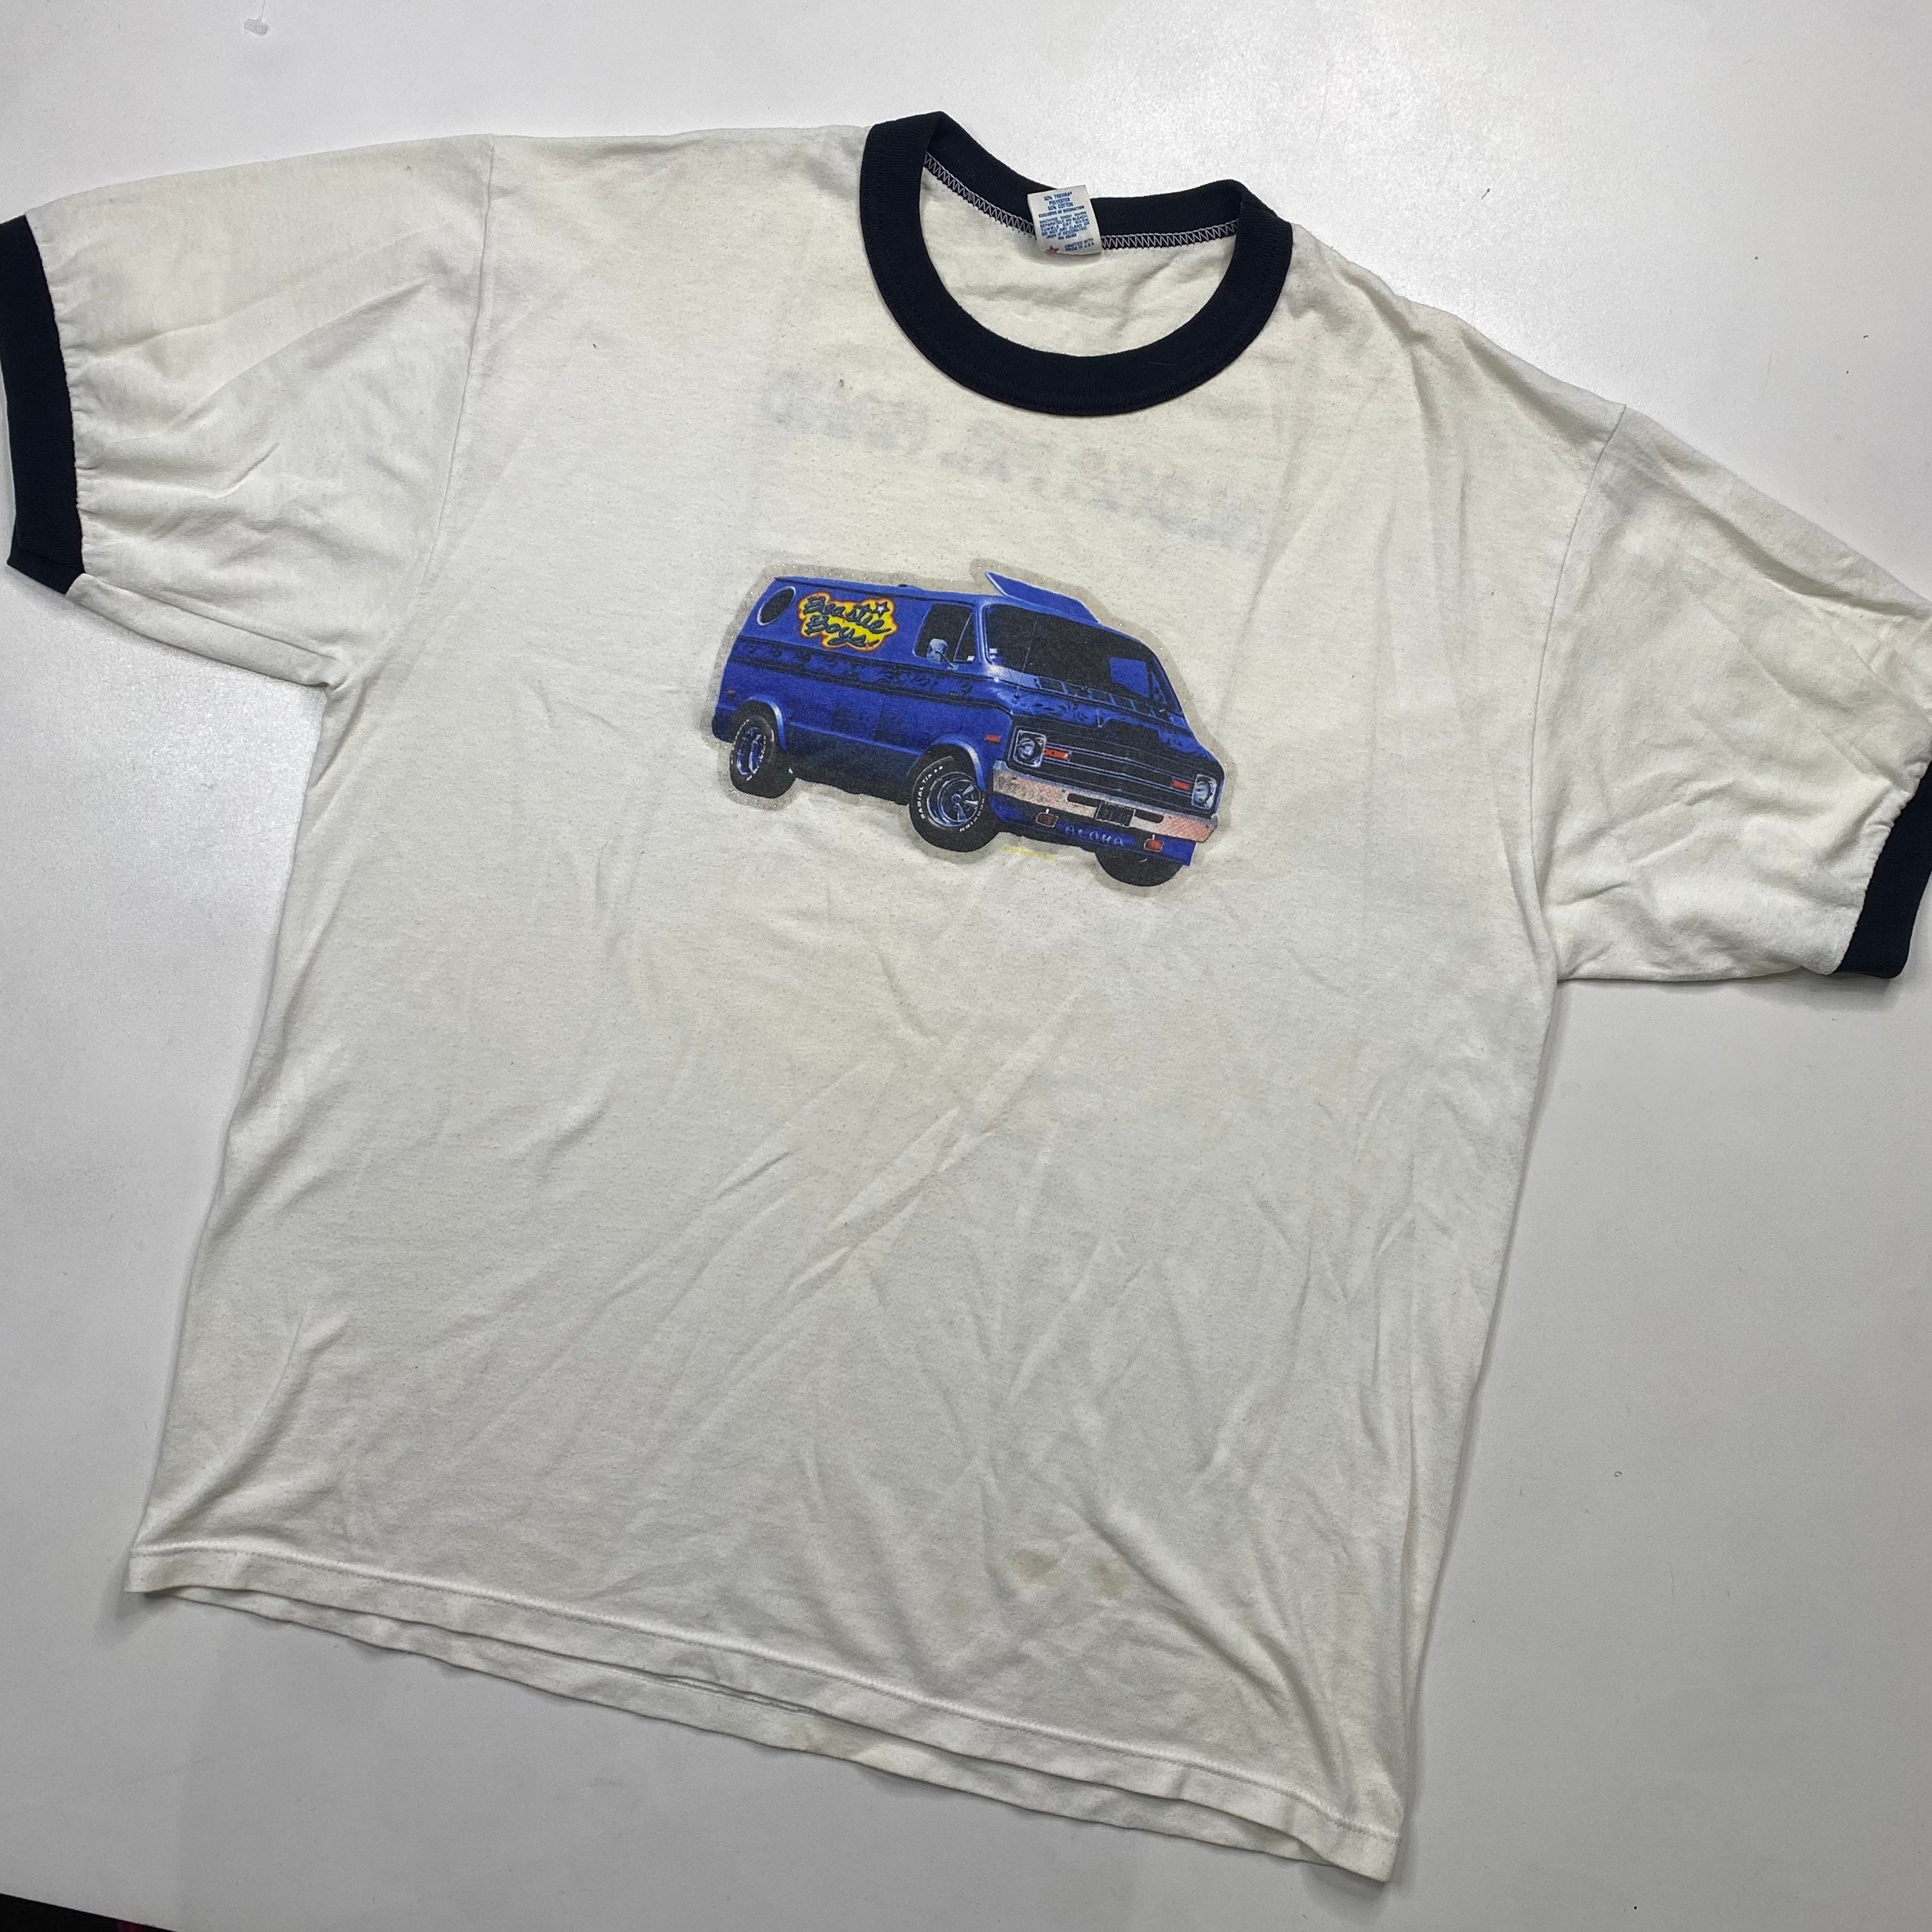 90's Beastie Boys Aloha Mr Hand T-shirt Size XL - Etsy Canada